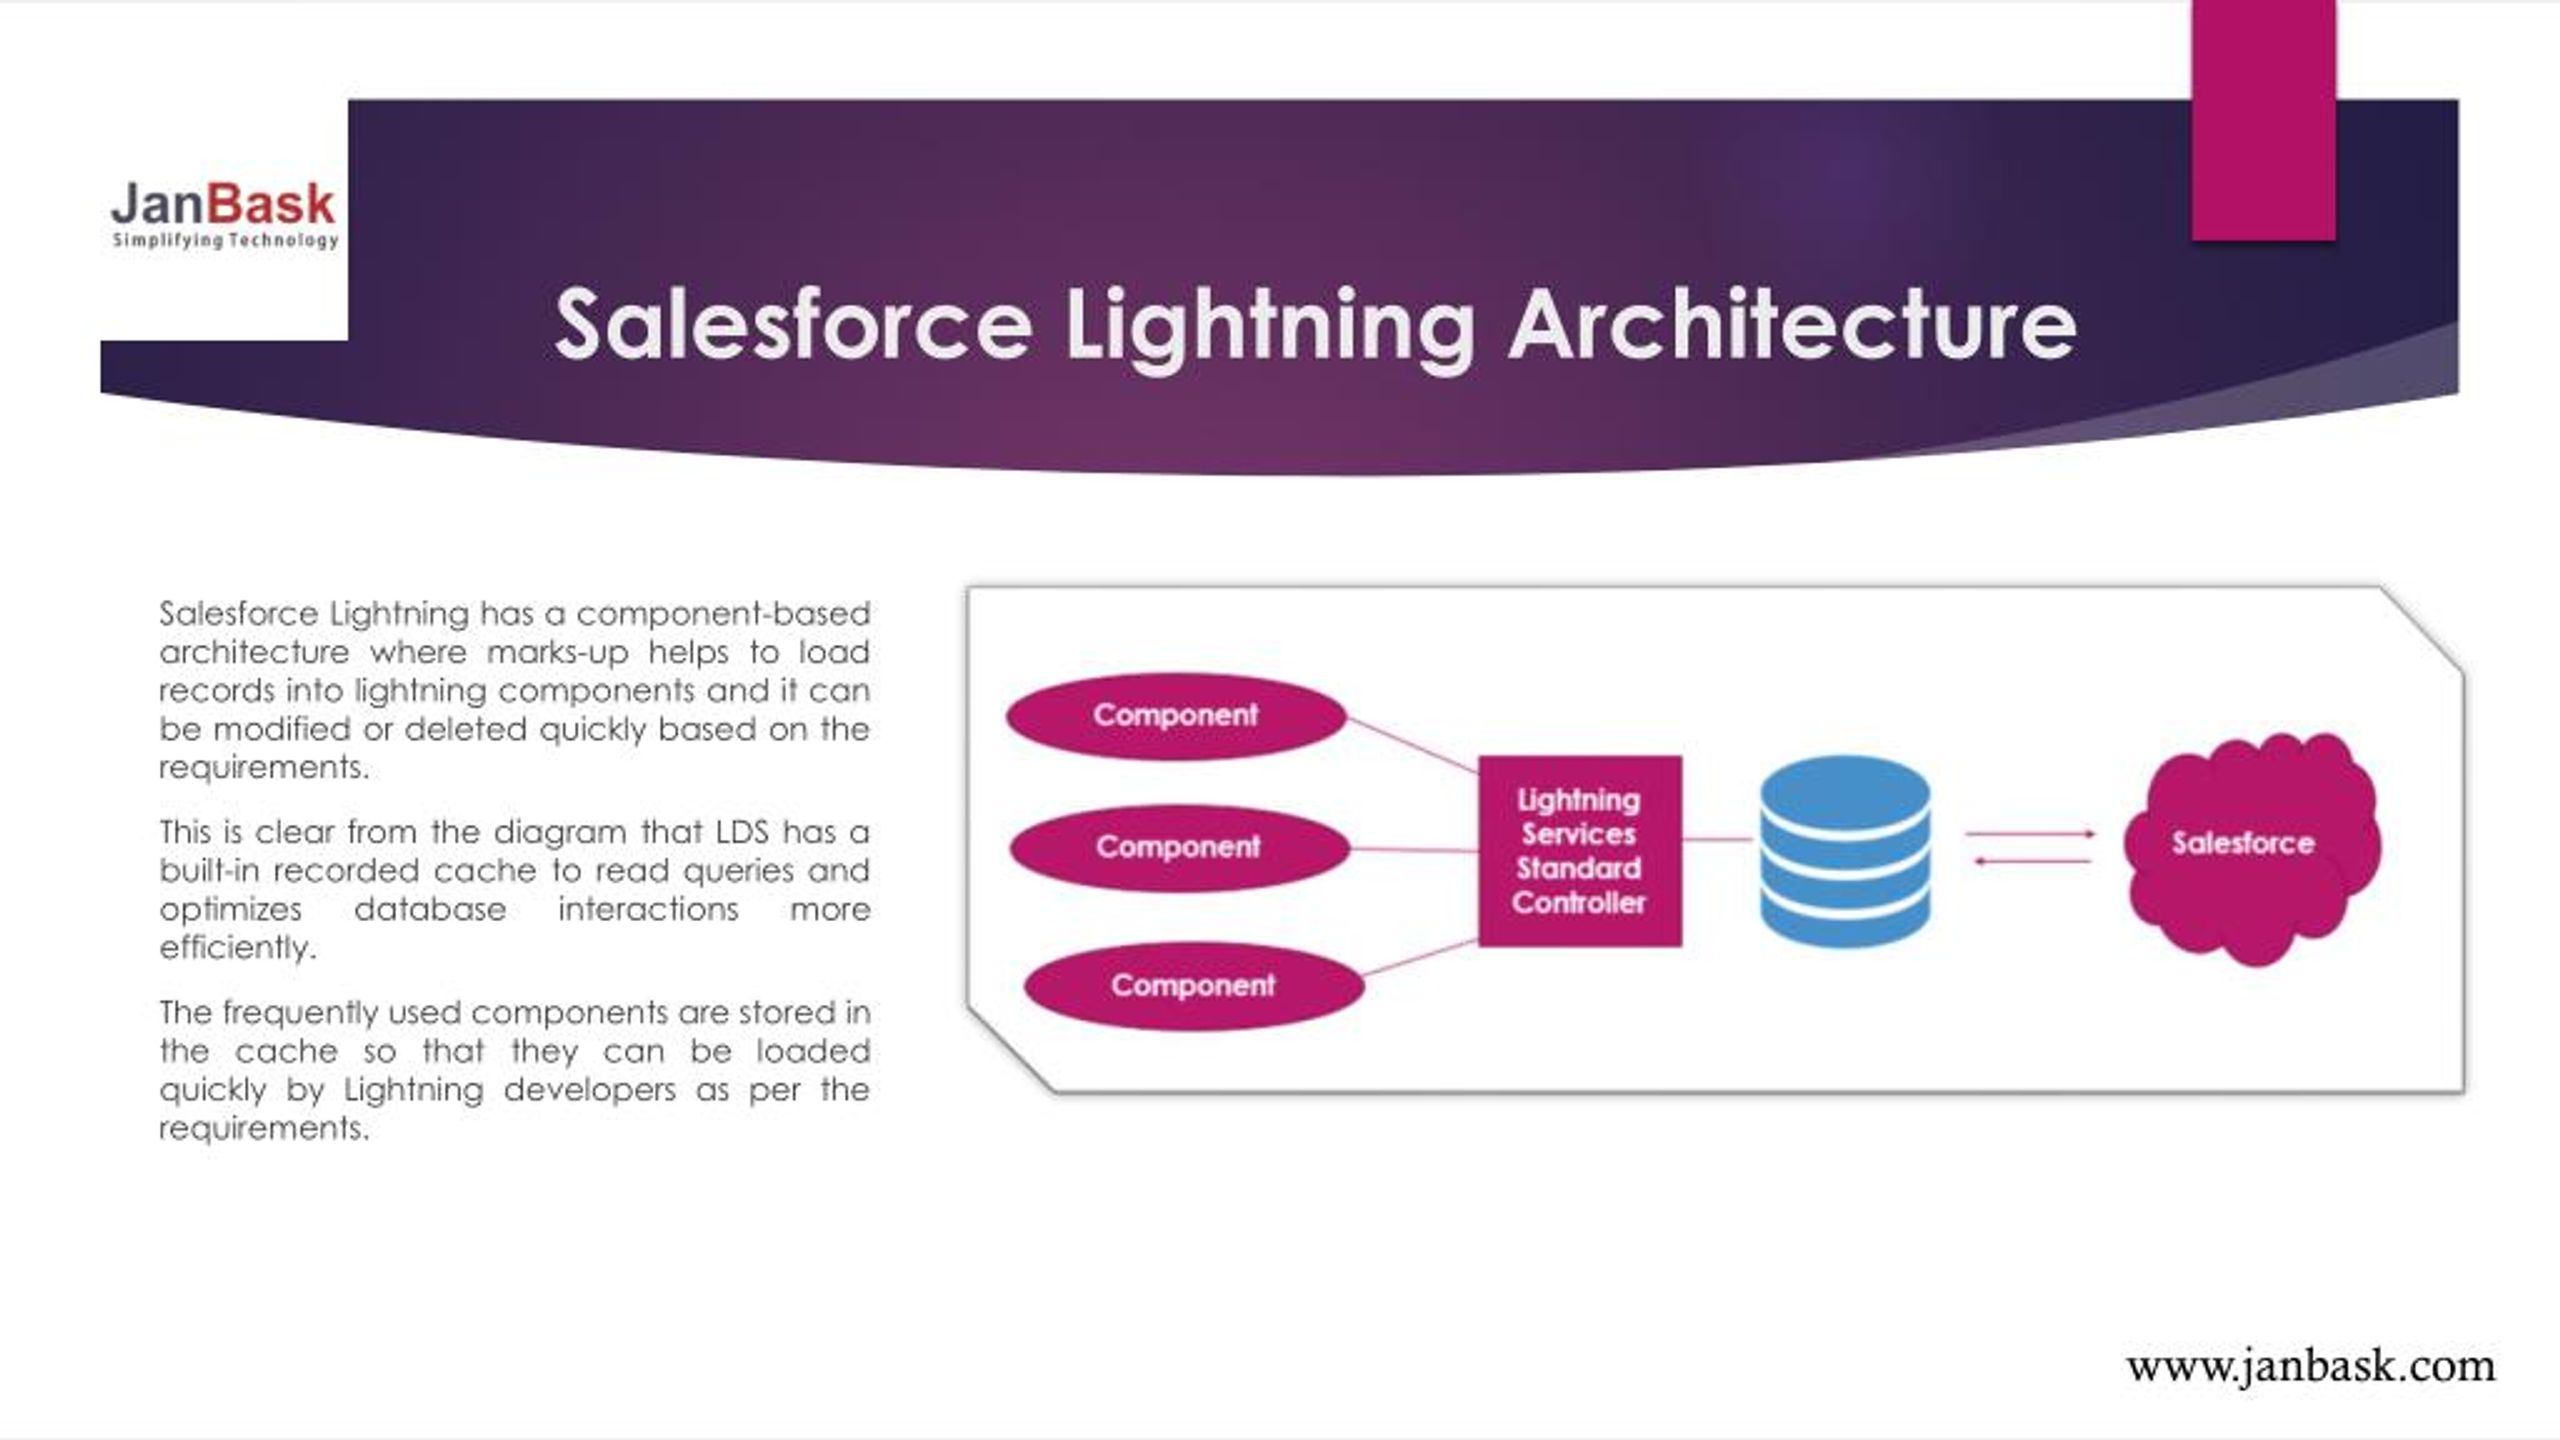 salesforce lightning presentation